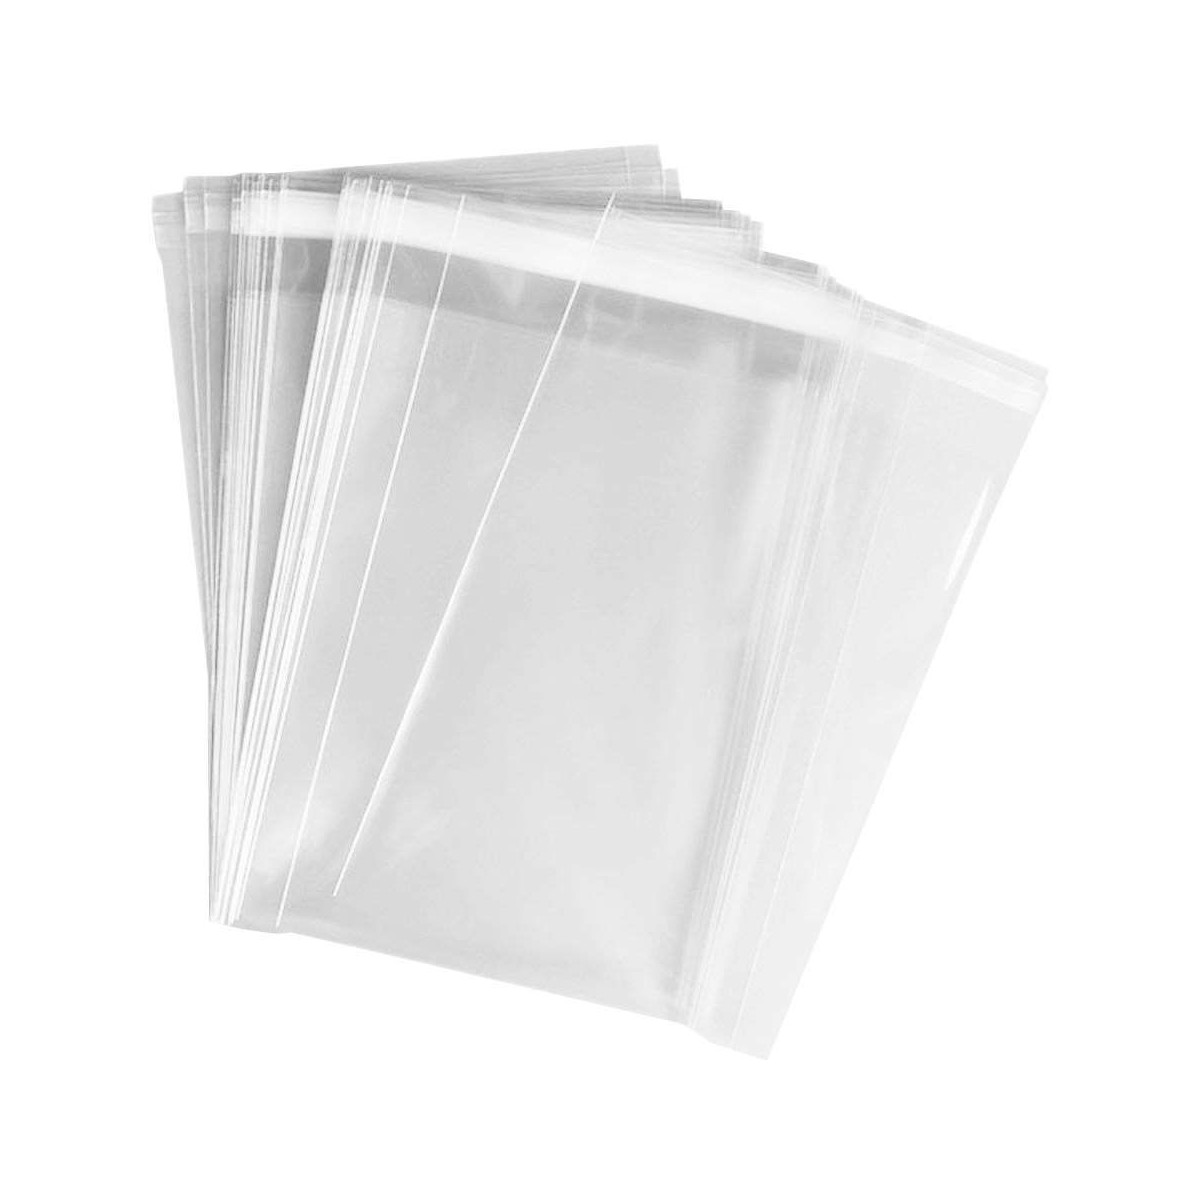 Saco de polipropileno transparente com aba adesiva